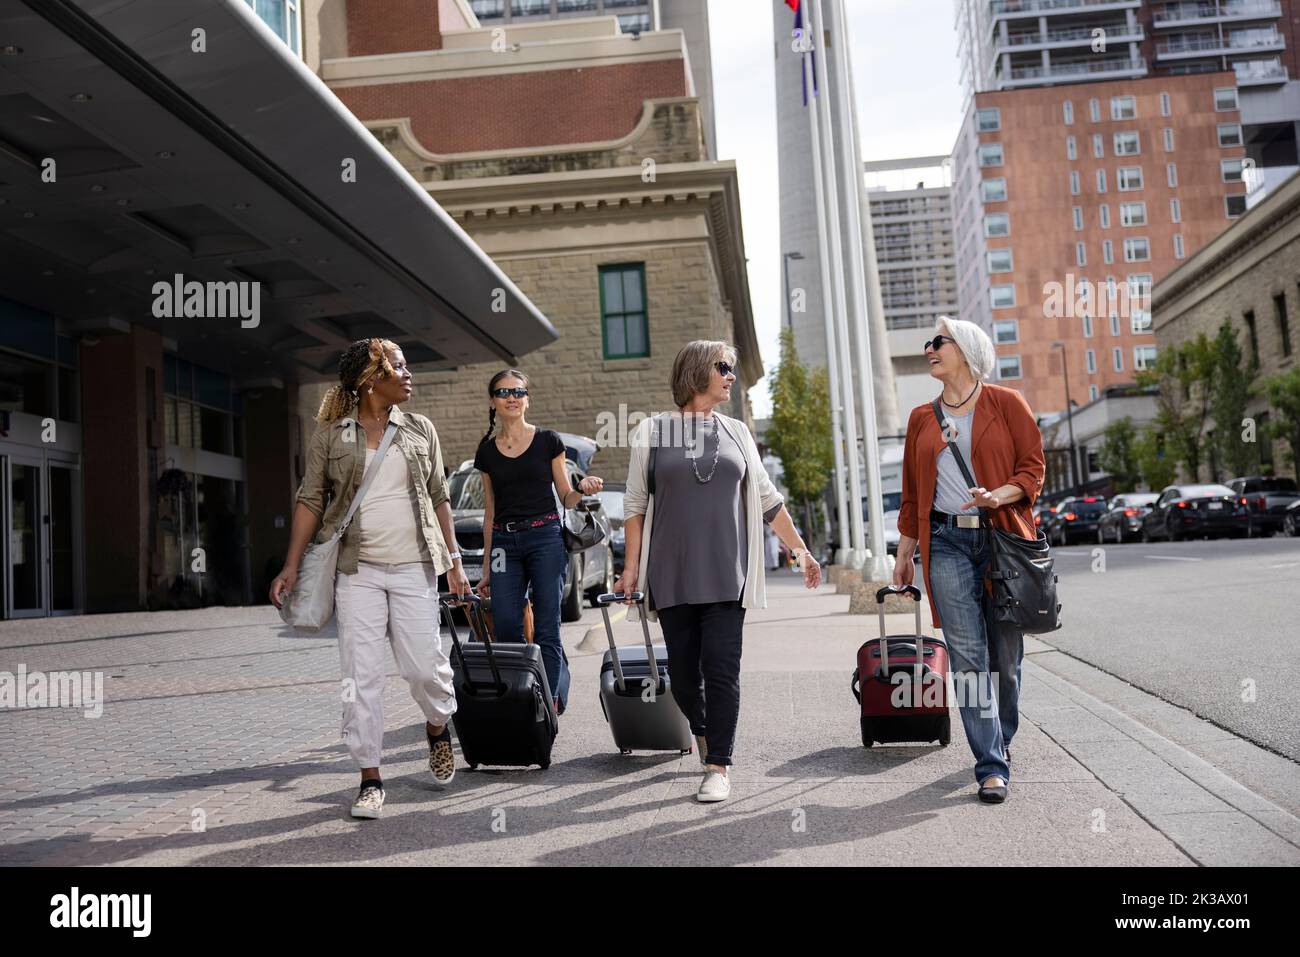 Mature women friends with suitcases enjoying city break Stock Photo